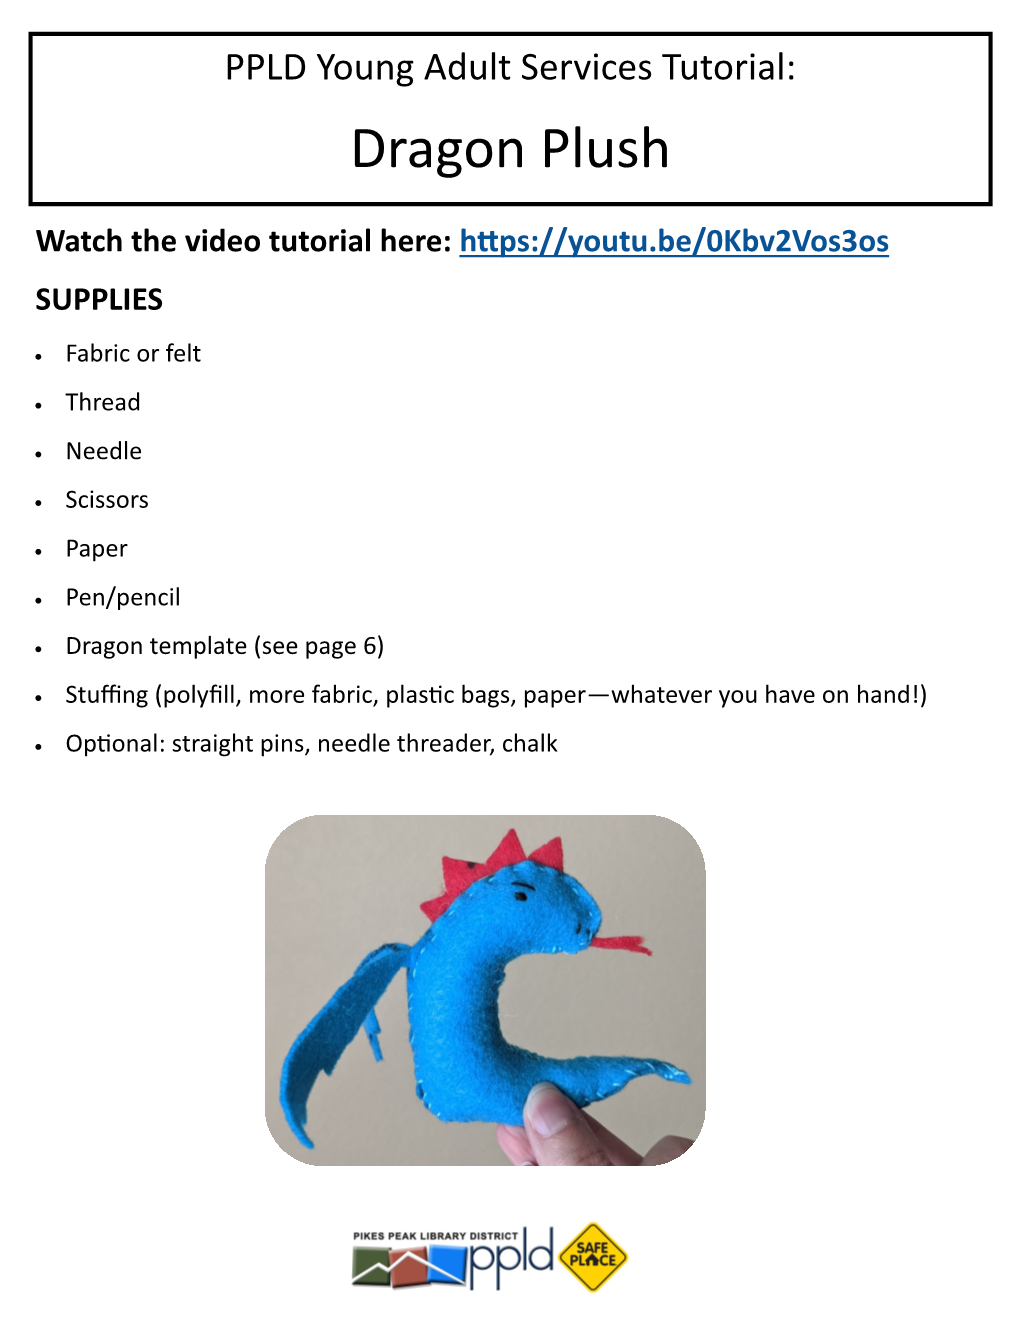 Dragon Plush Tutorial